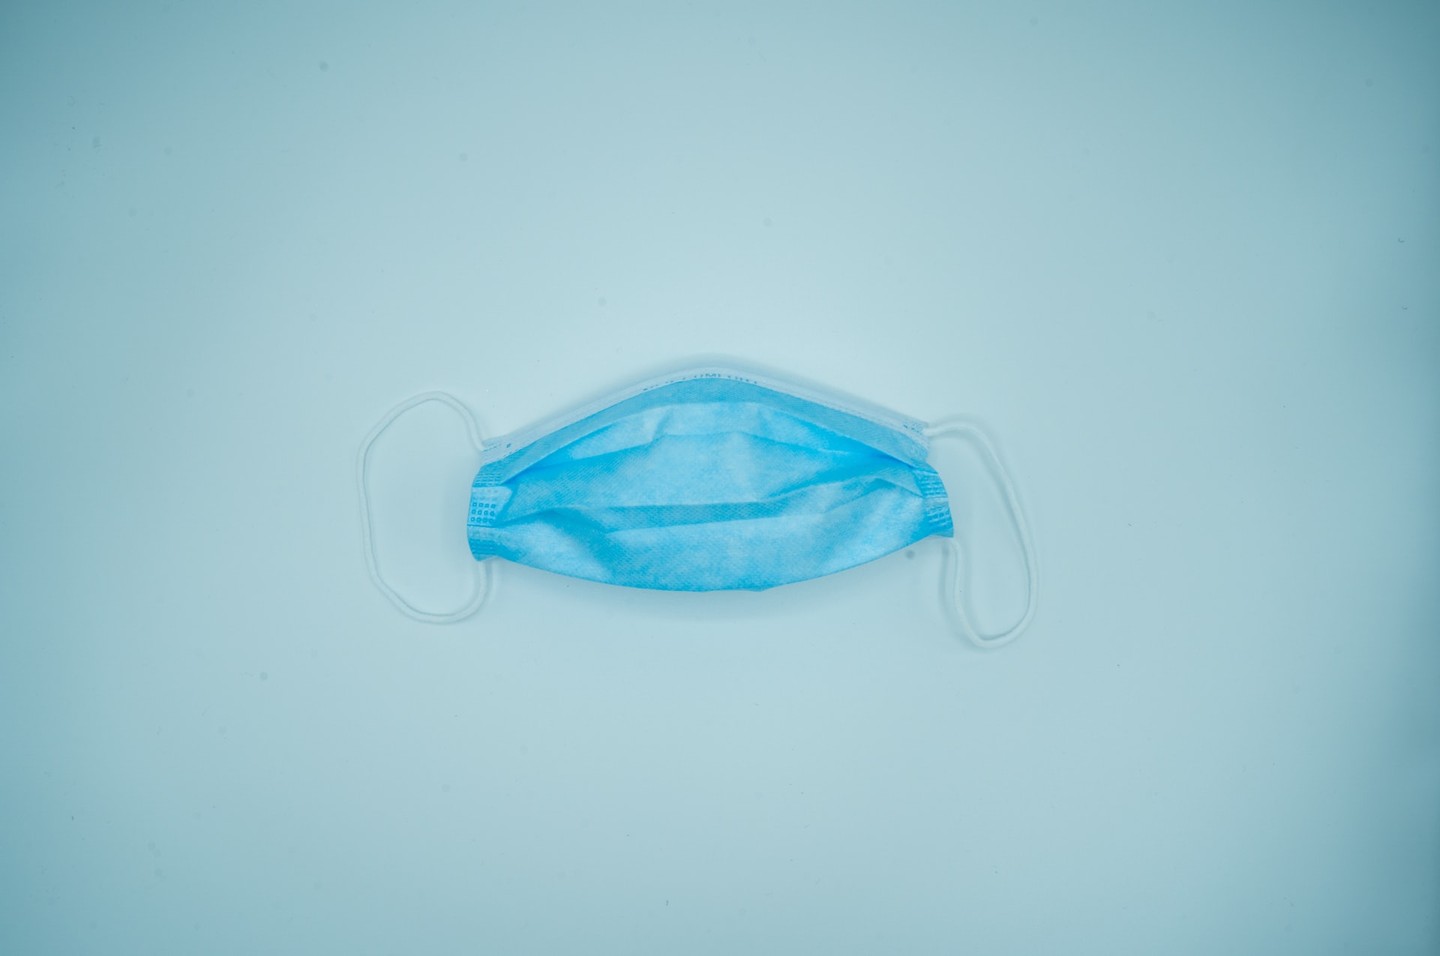 A blue medical mask